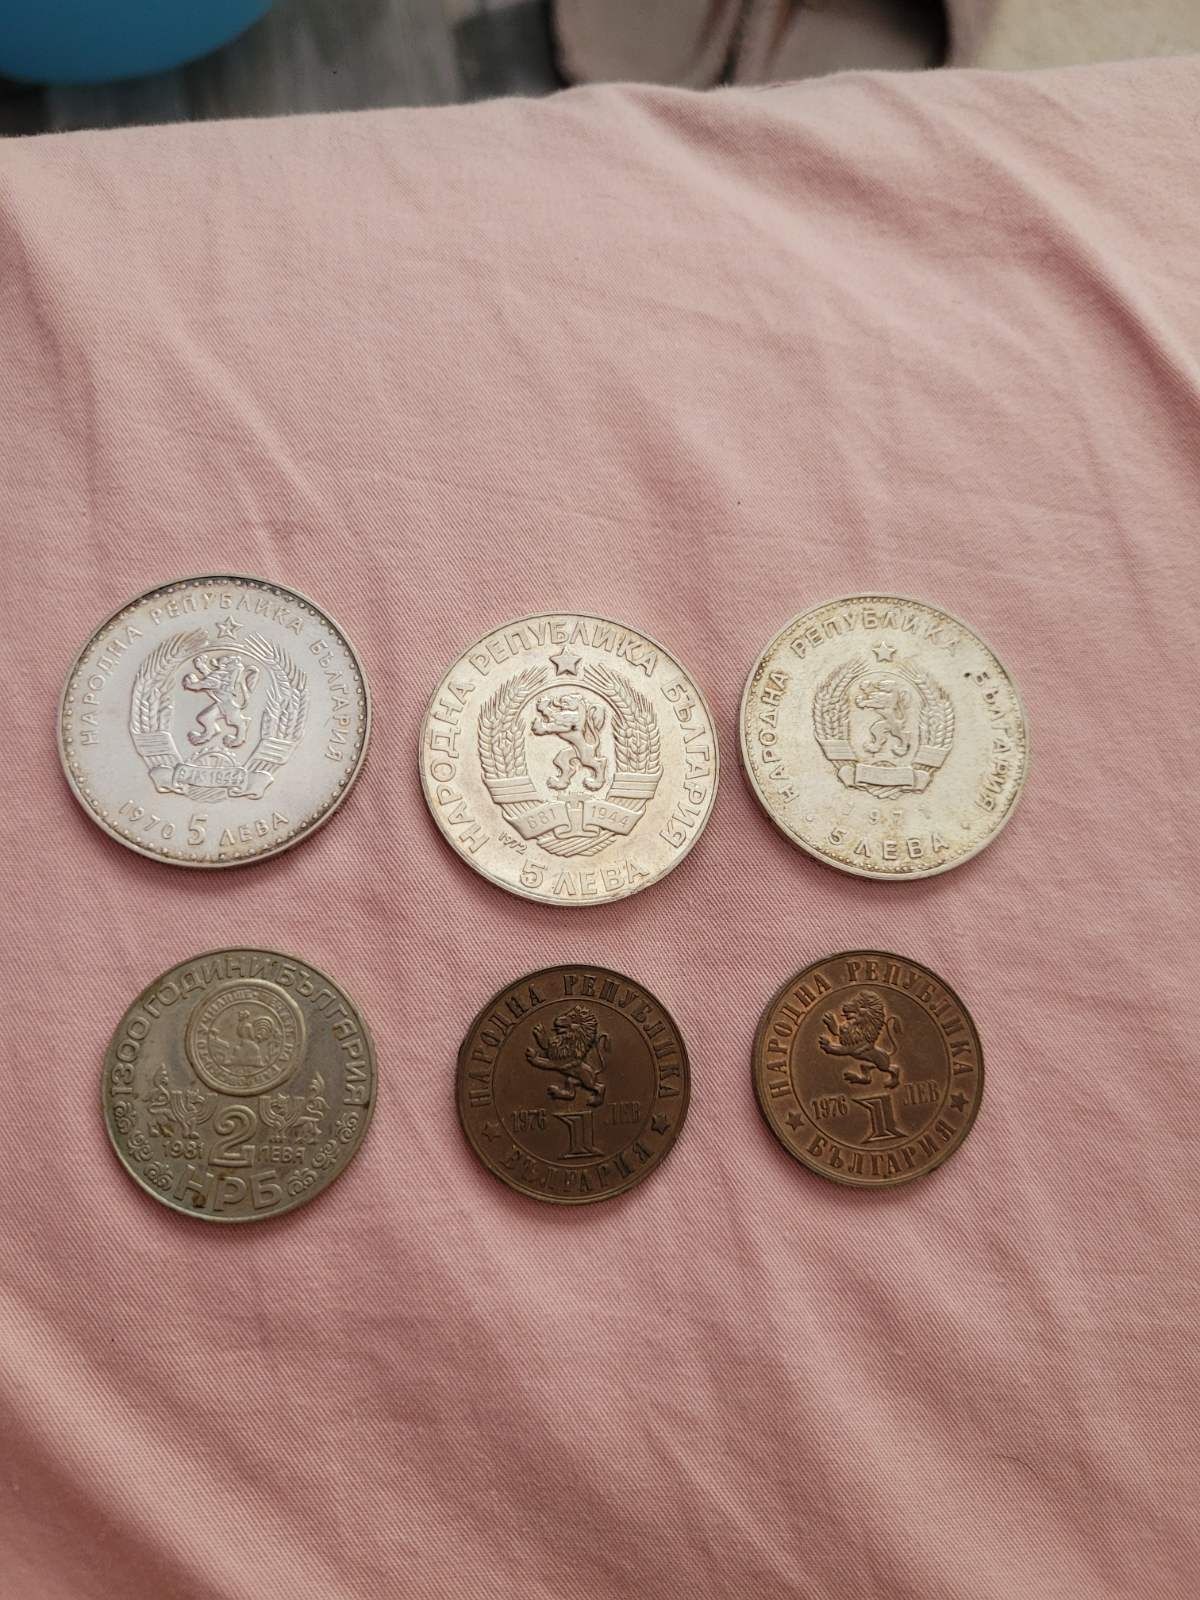 6 броя монети (1970-1981)-медни и сребърни